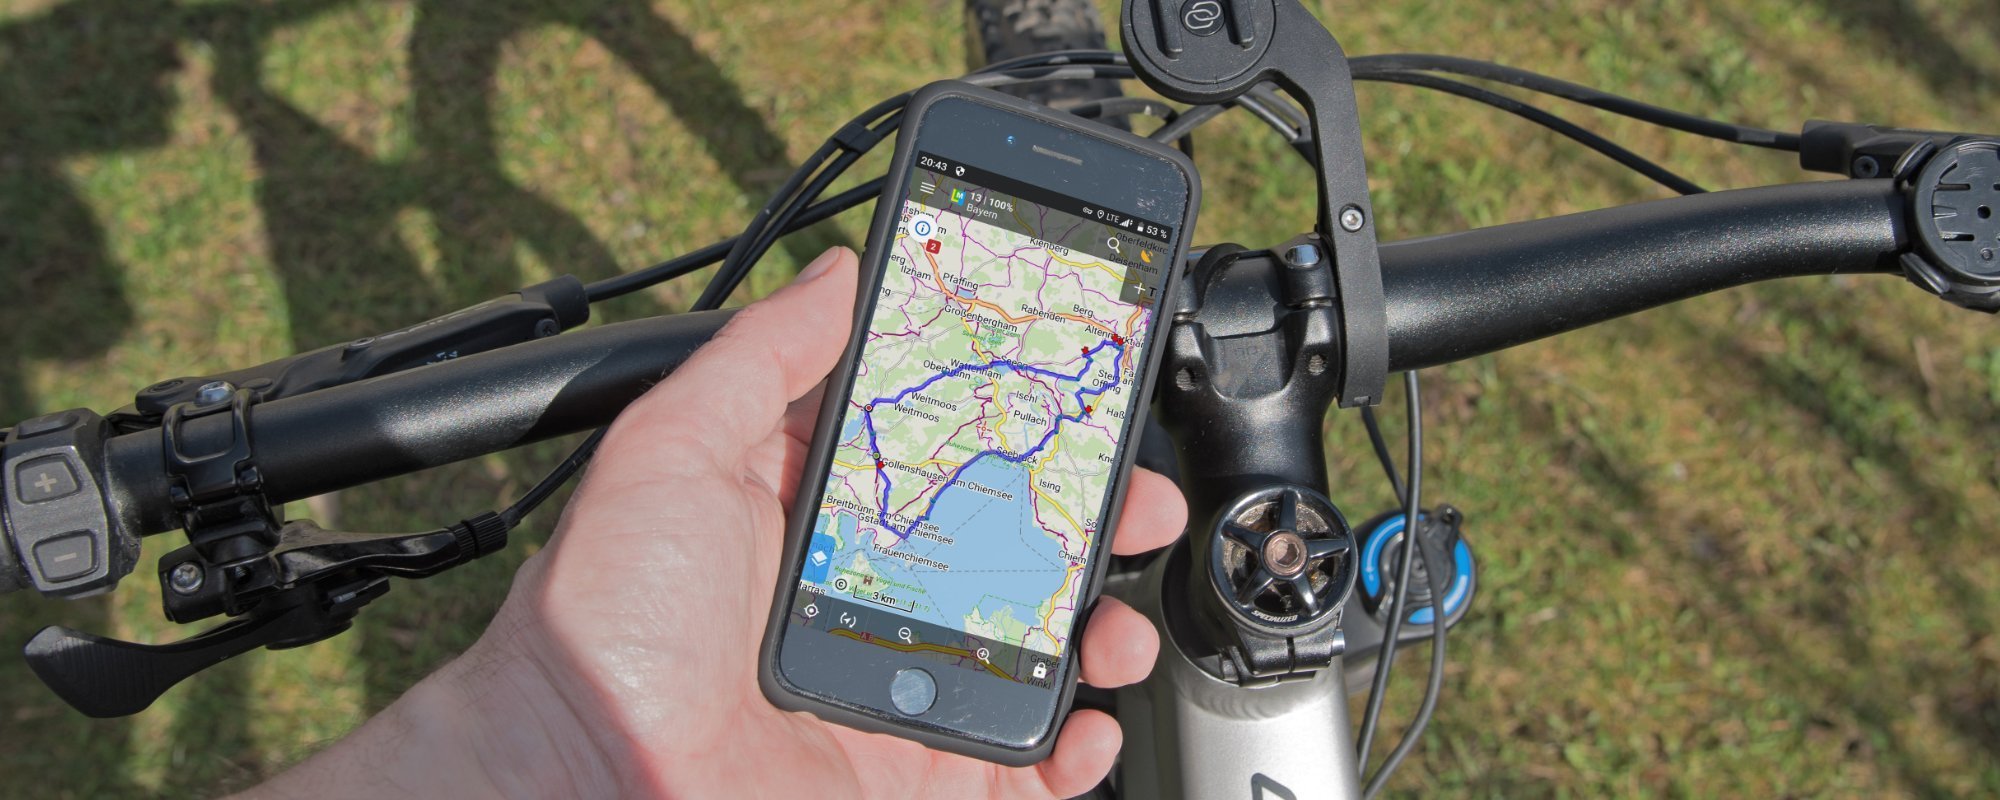 Locus Map Im Test Gunstige Offline Fahrradnavigation Fur Android